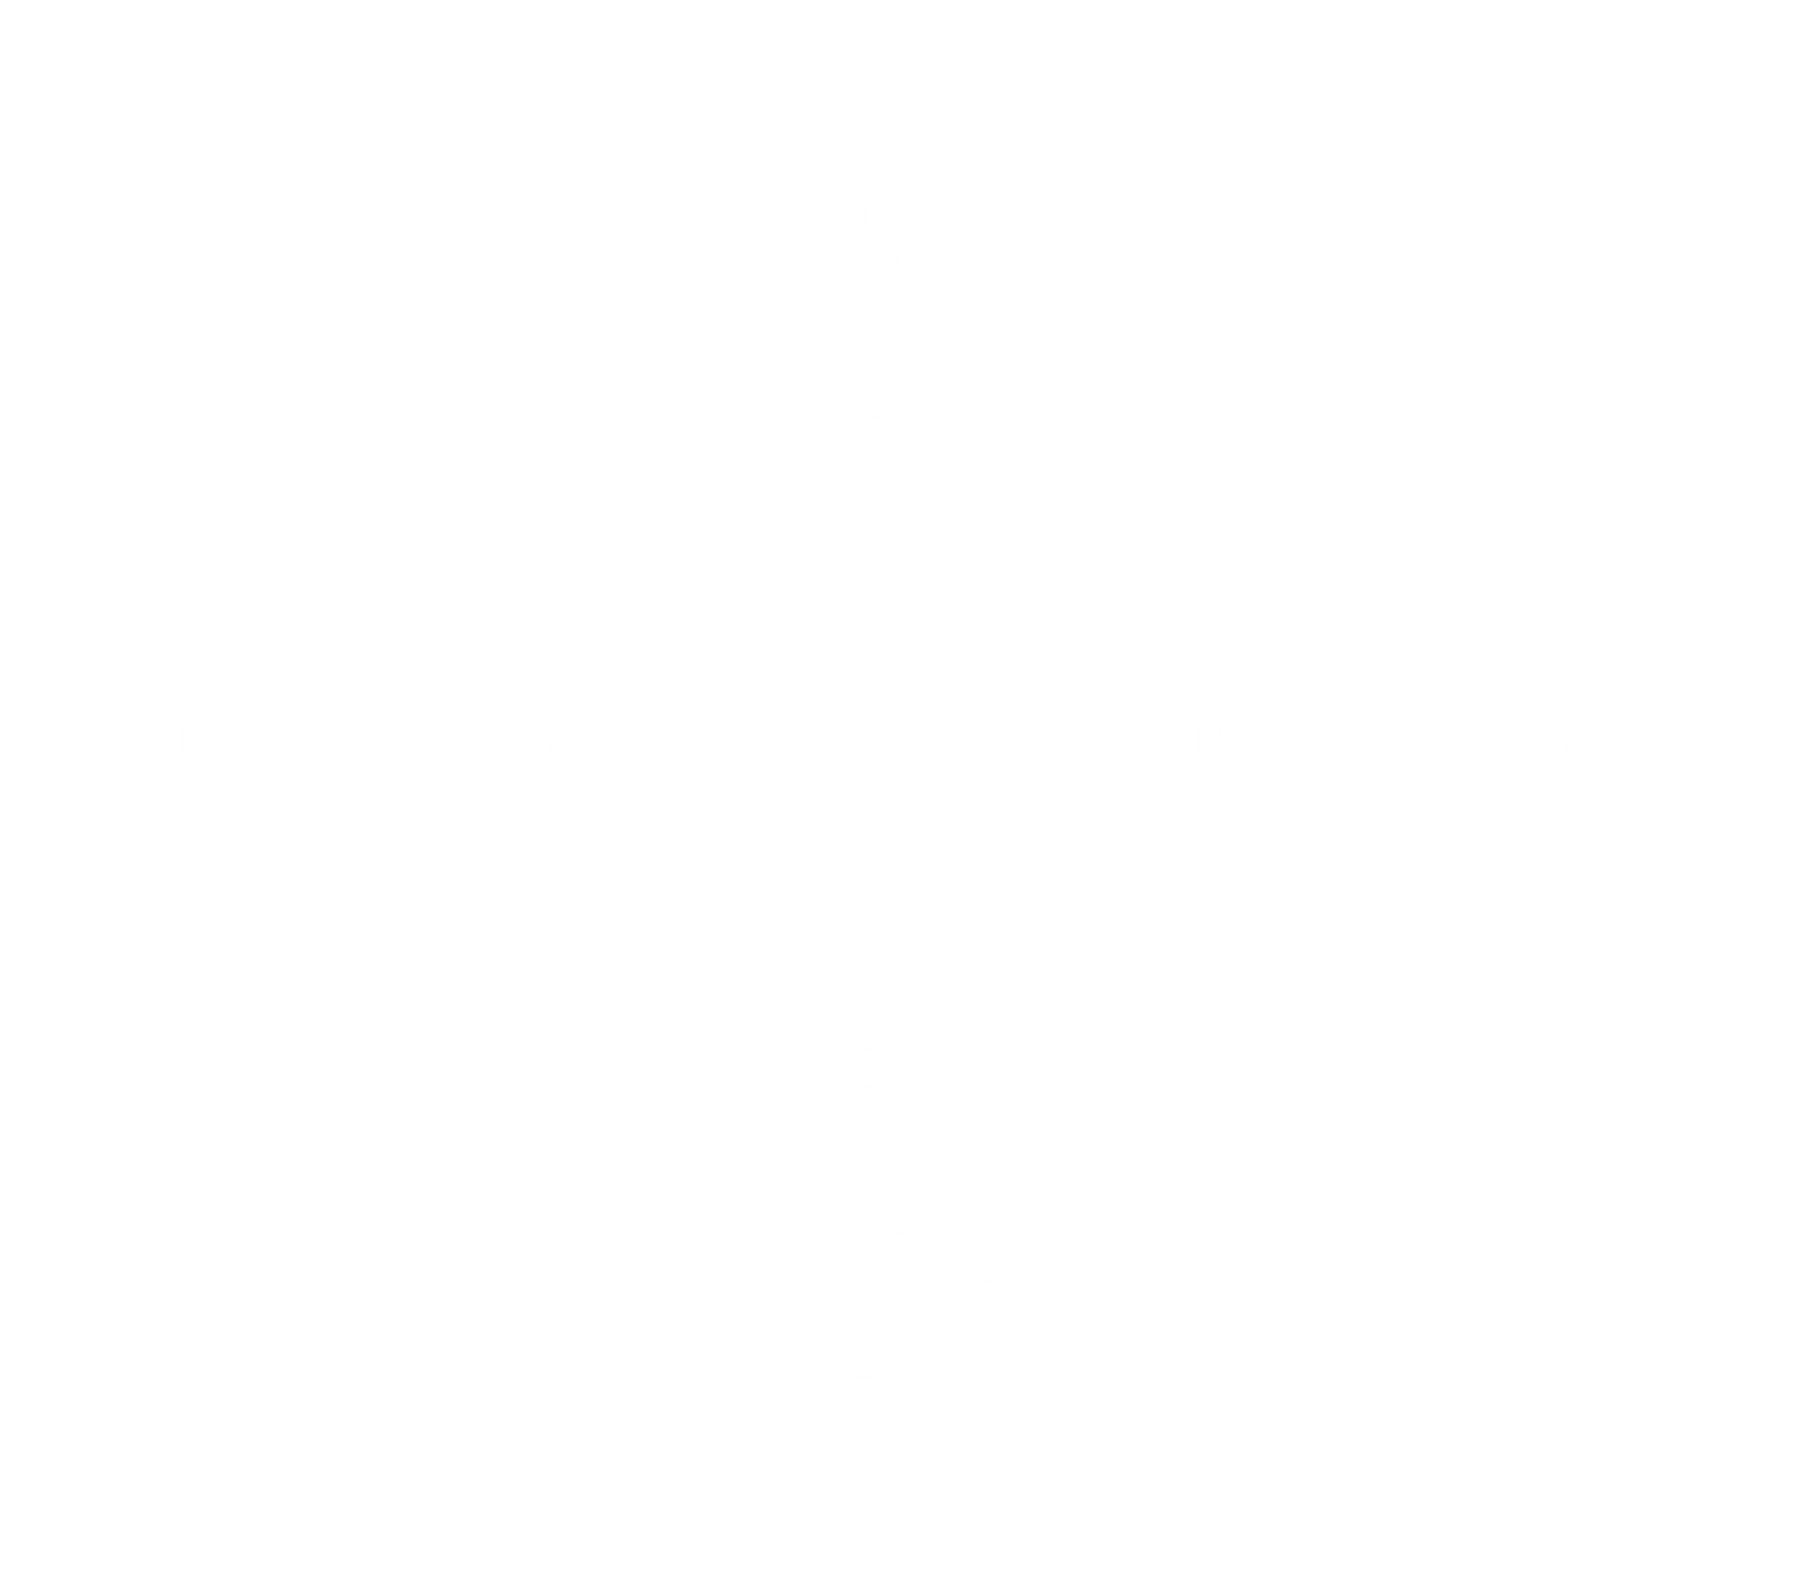 B-Stitch Embroidery & Printing